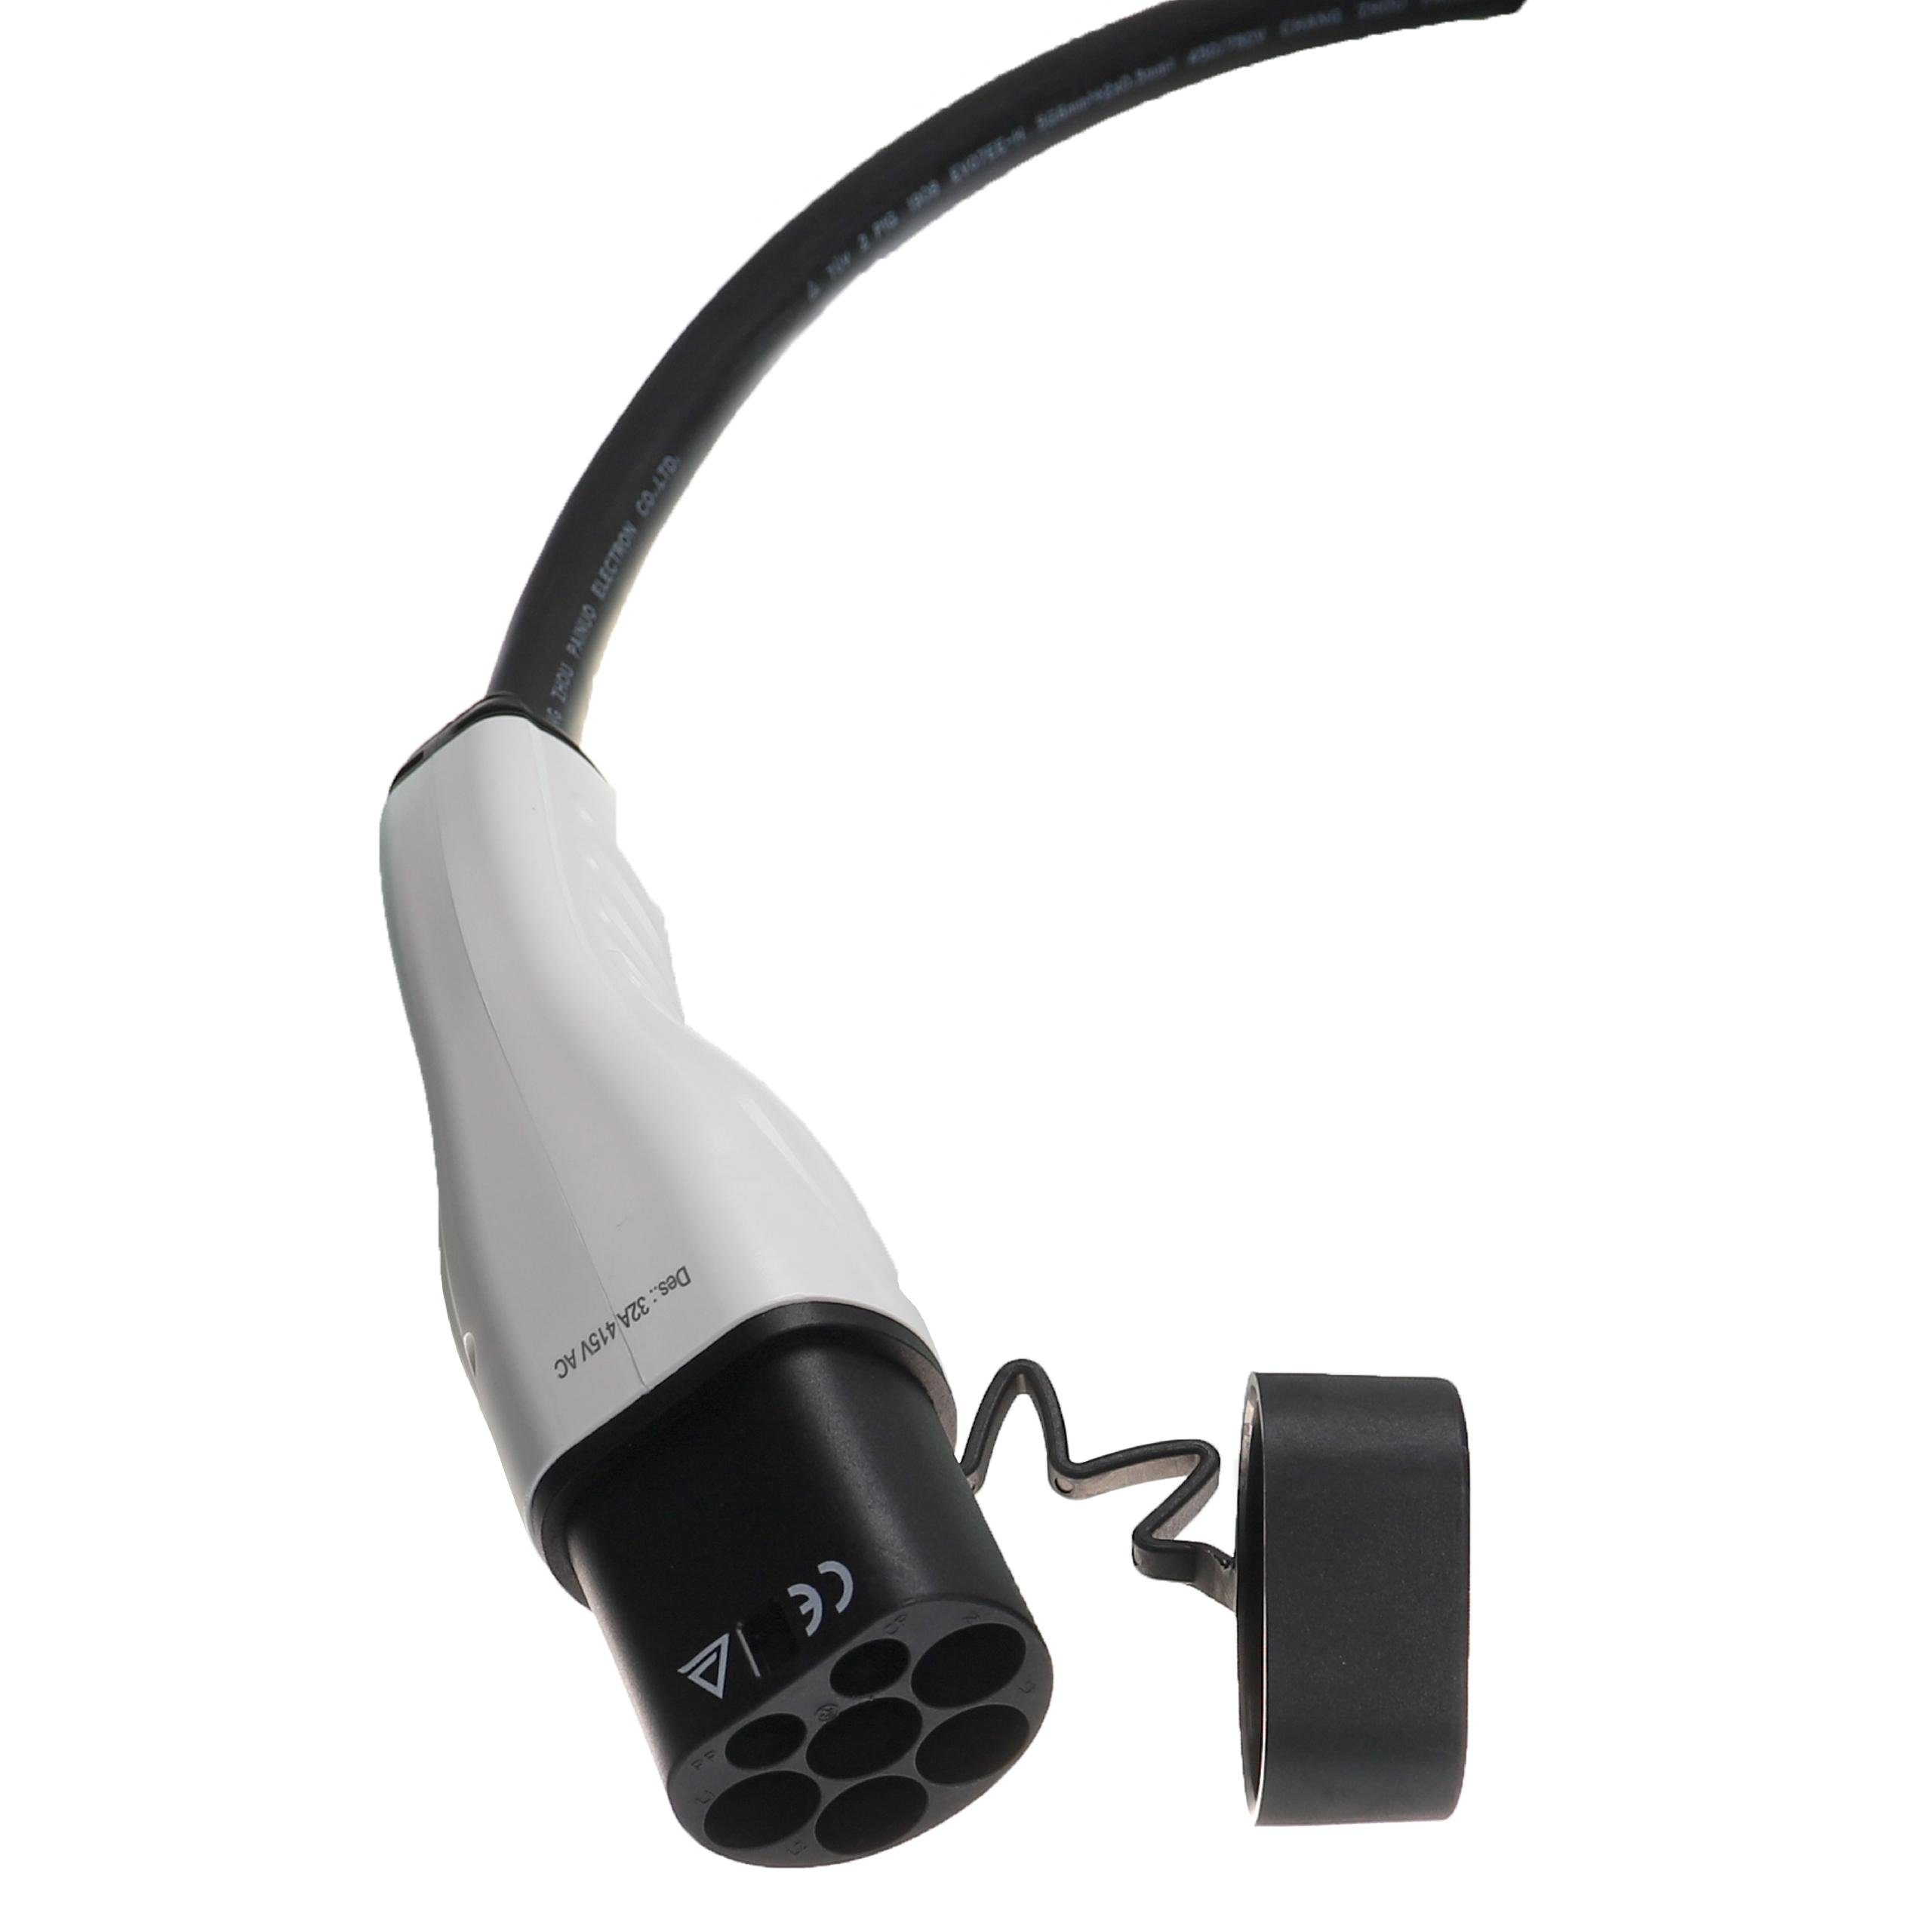 für Elektro-Kabel 45e X5 Elektroauto Plug-in-Hybrid passend vhbw xDrive / BMW